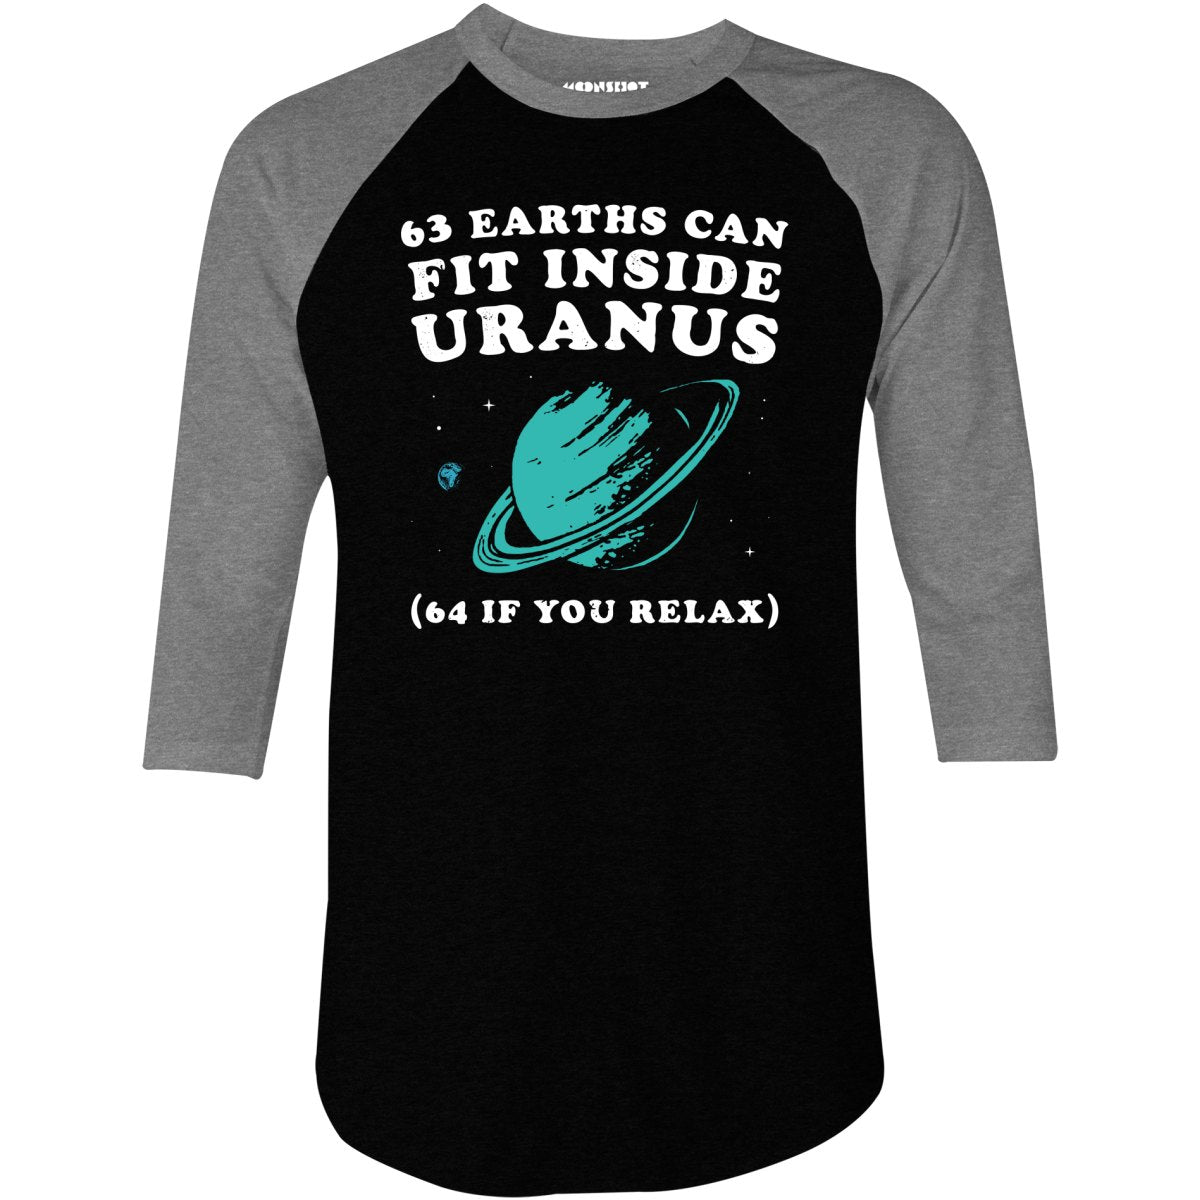 63 Earths Can Fit Inside Uranus - 3/4 Sleeve Raglan T-Shirt